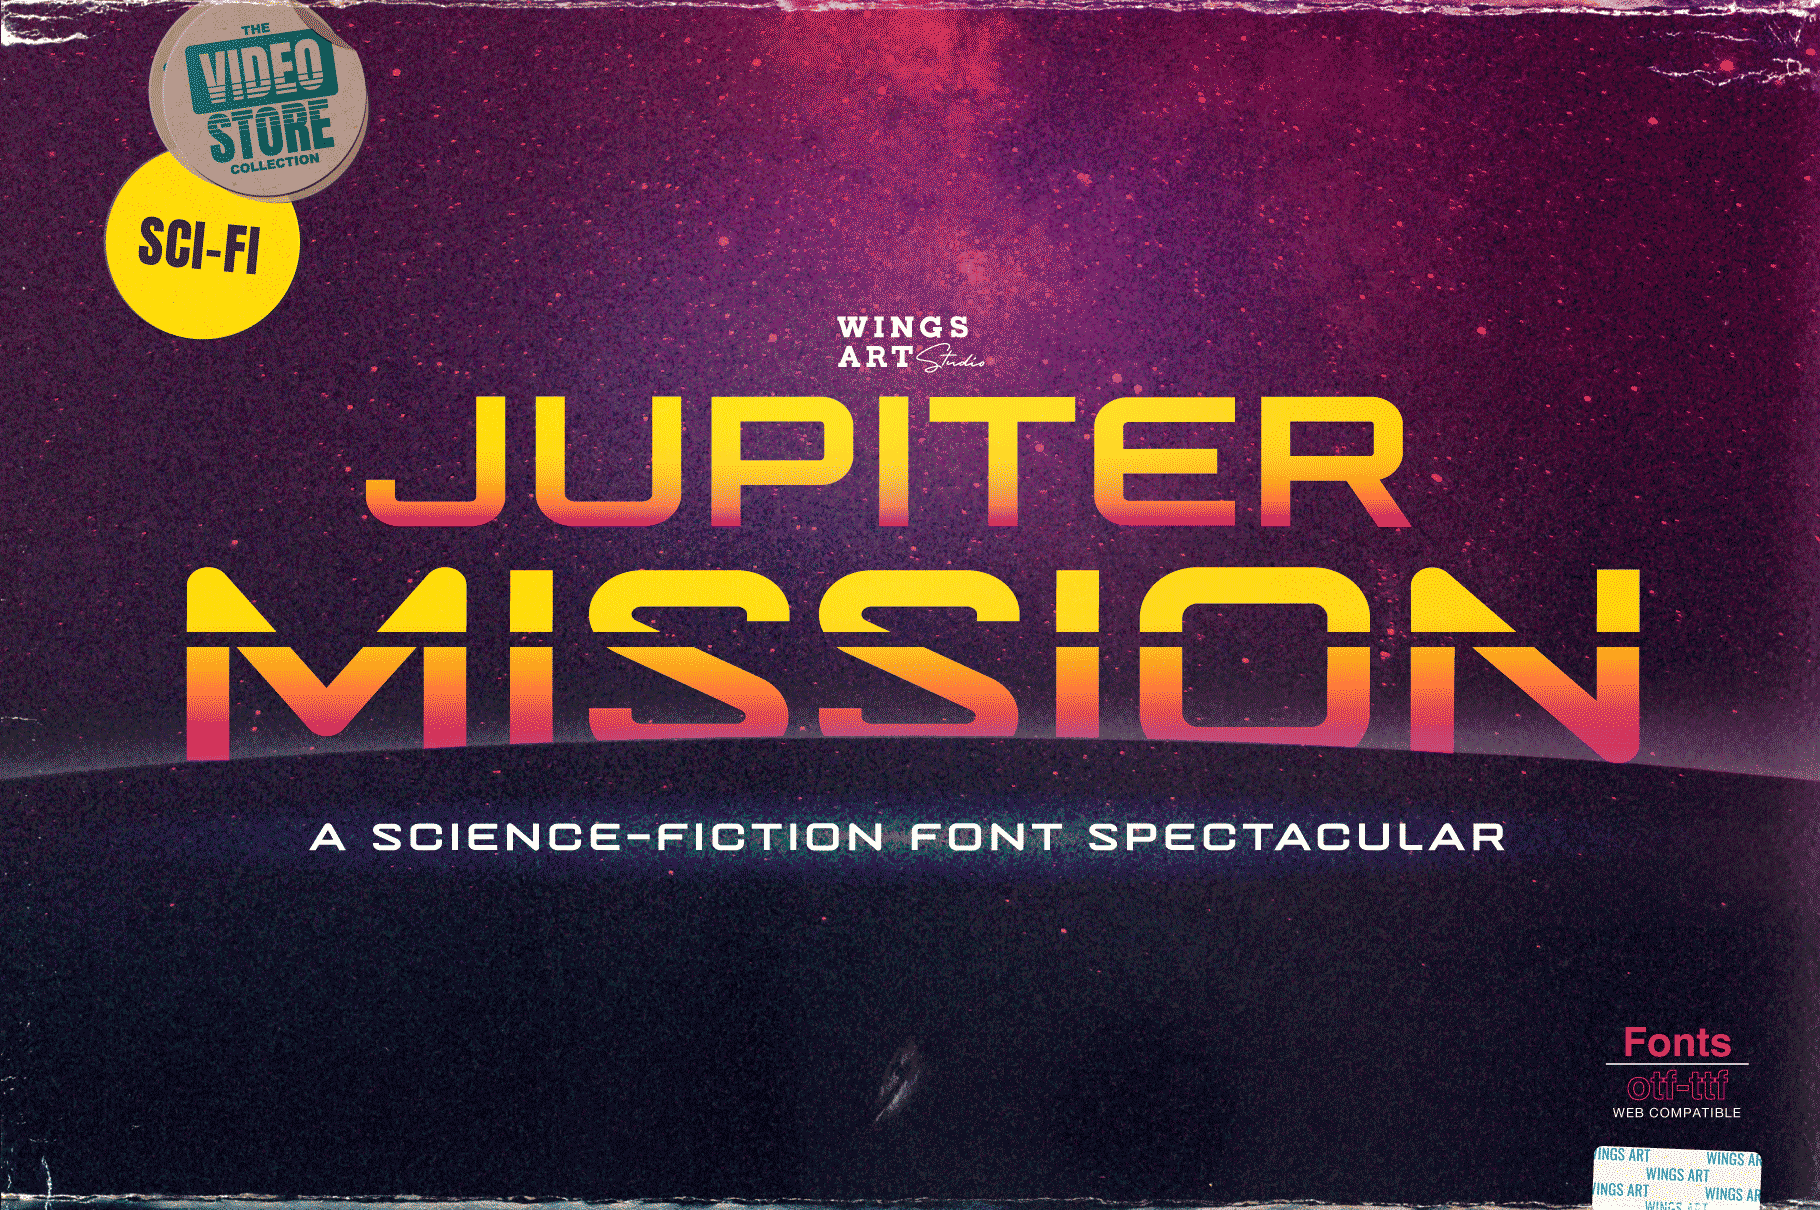 Jupiter Mission: A Science-Fiction Font Spectacular by Wingsart Studio